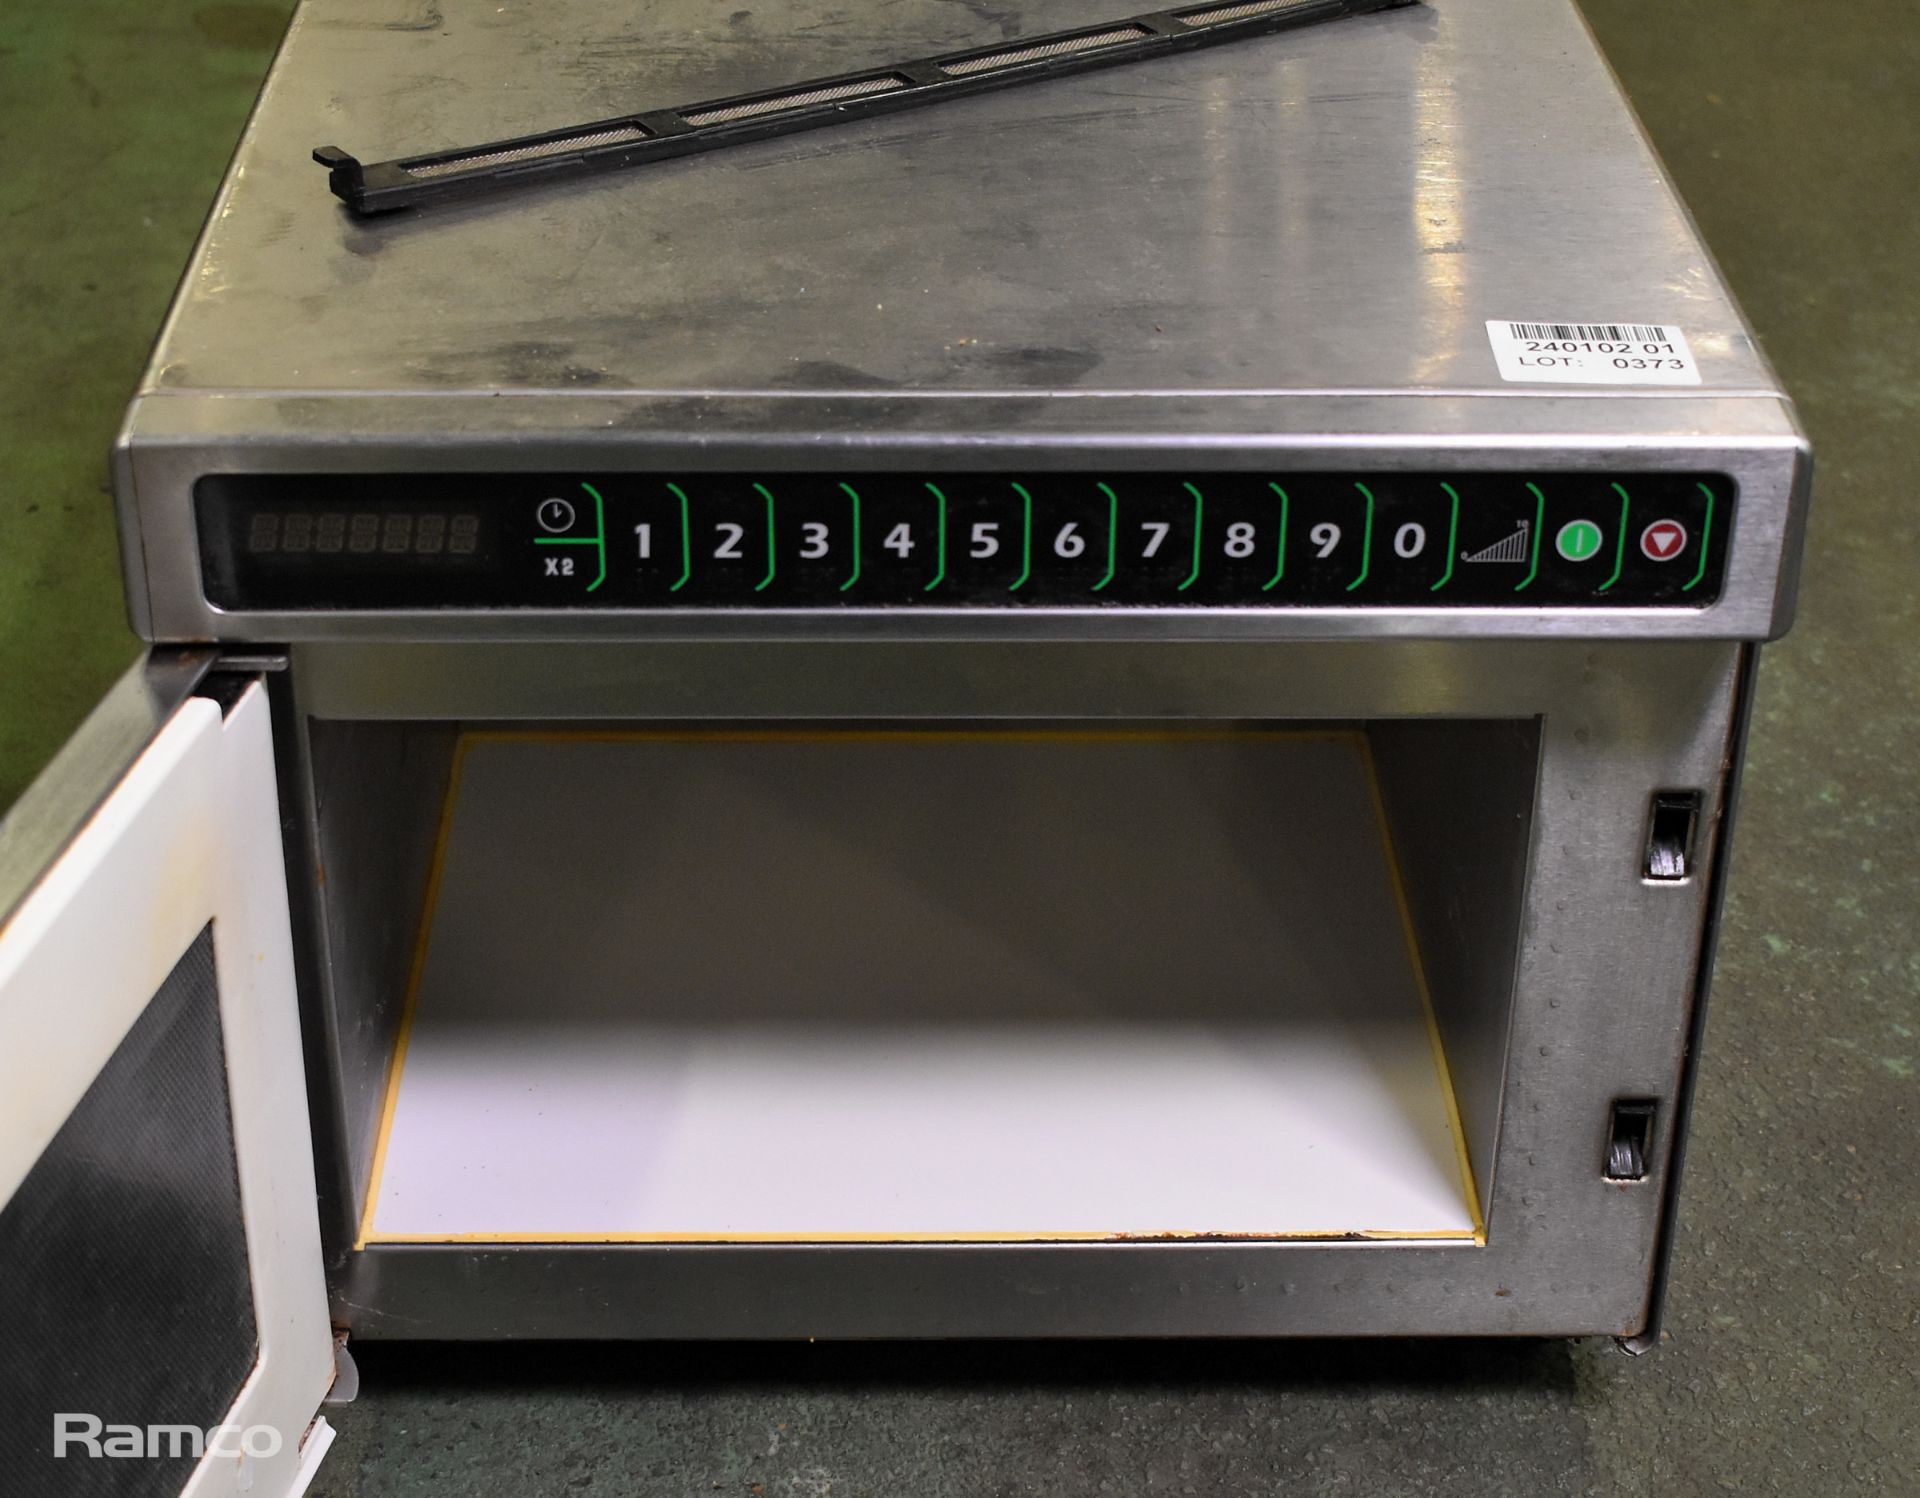 MenuMaster DEC14E2 heavy duty programmable 1400W microwave - Image 3 of 6